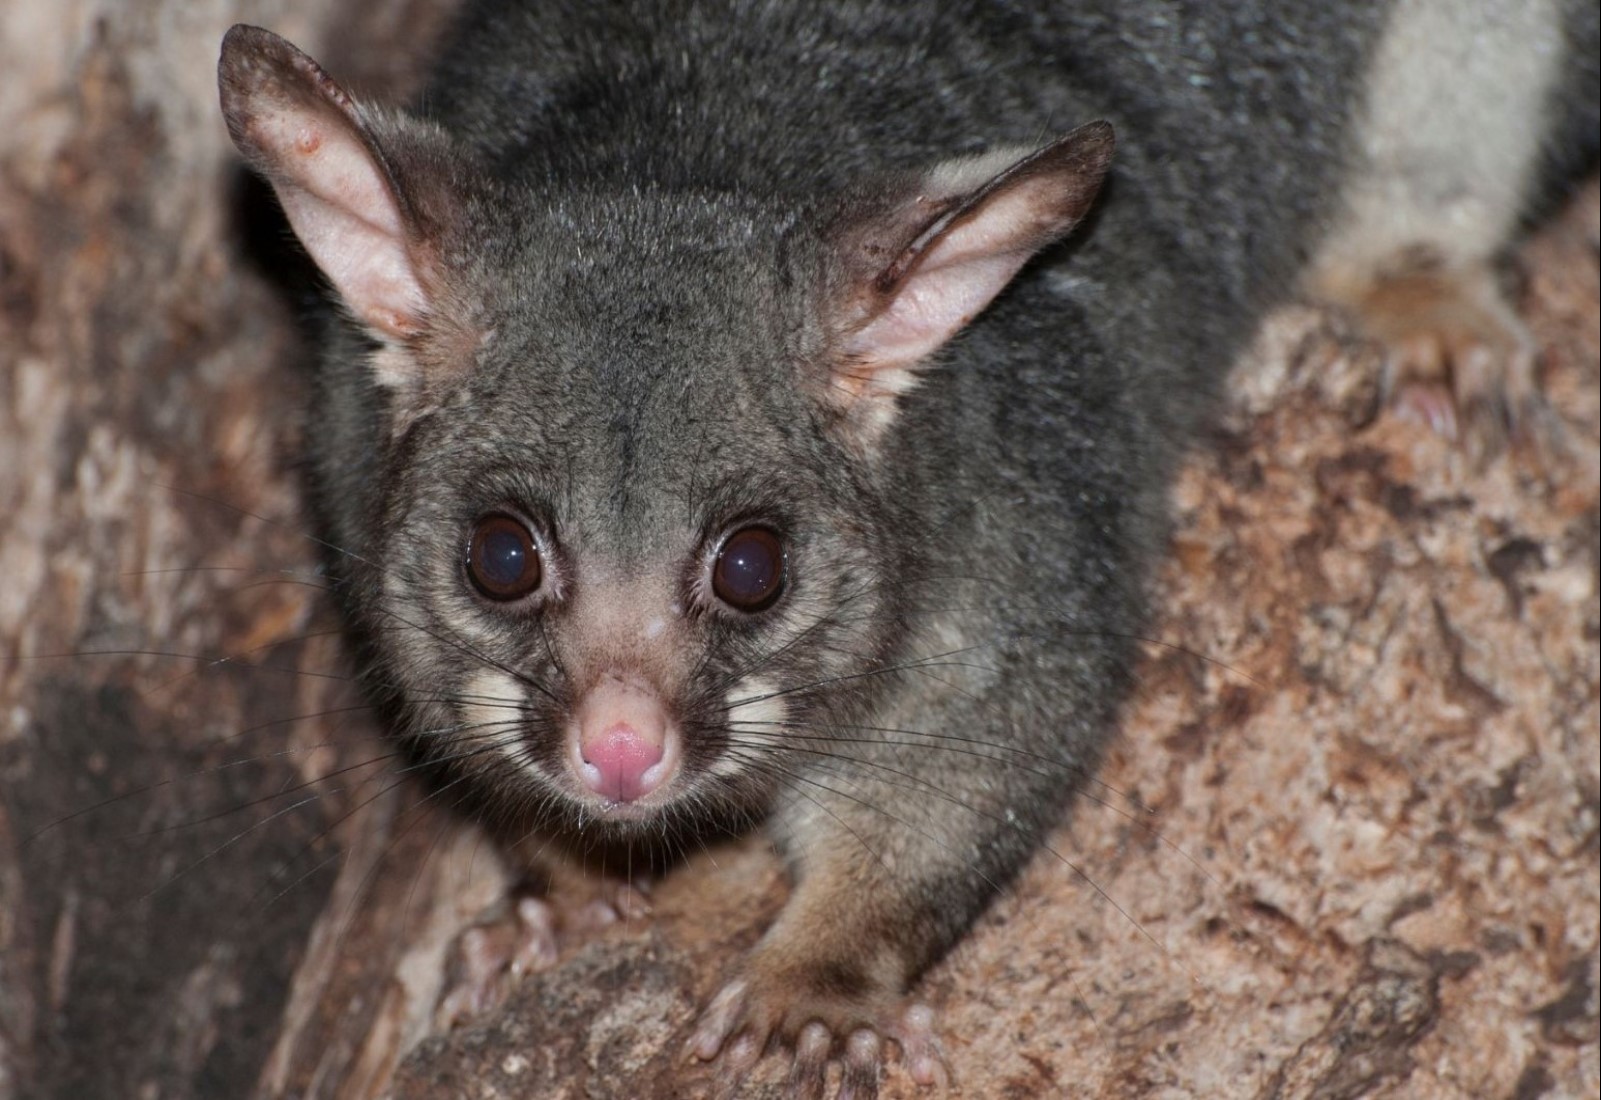 Rodent eradication extermination control pest mice mouse possum